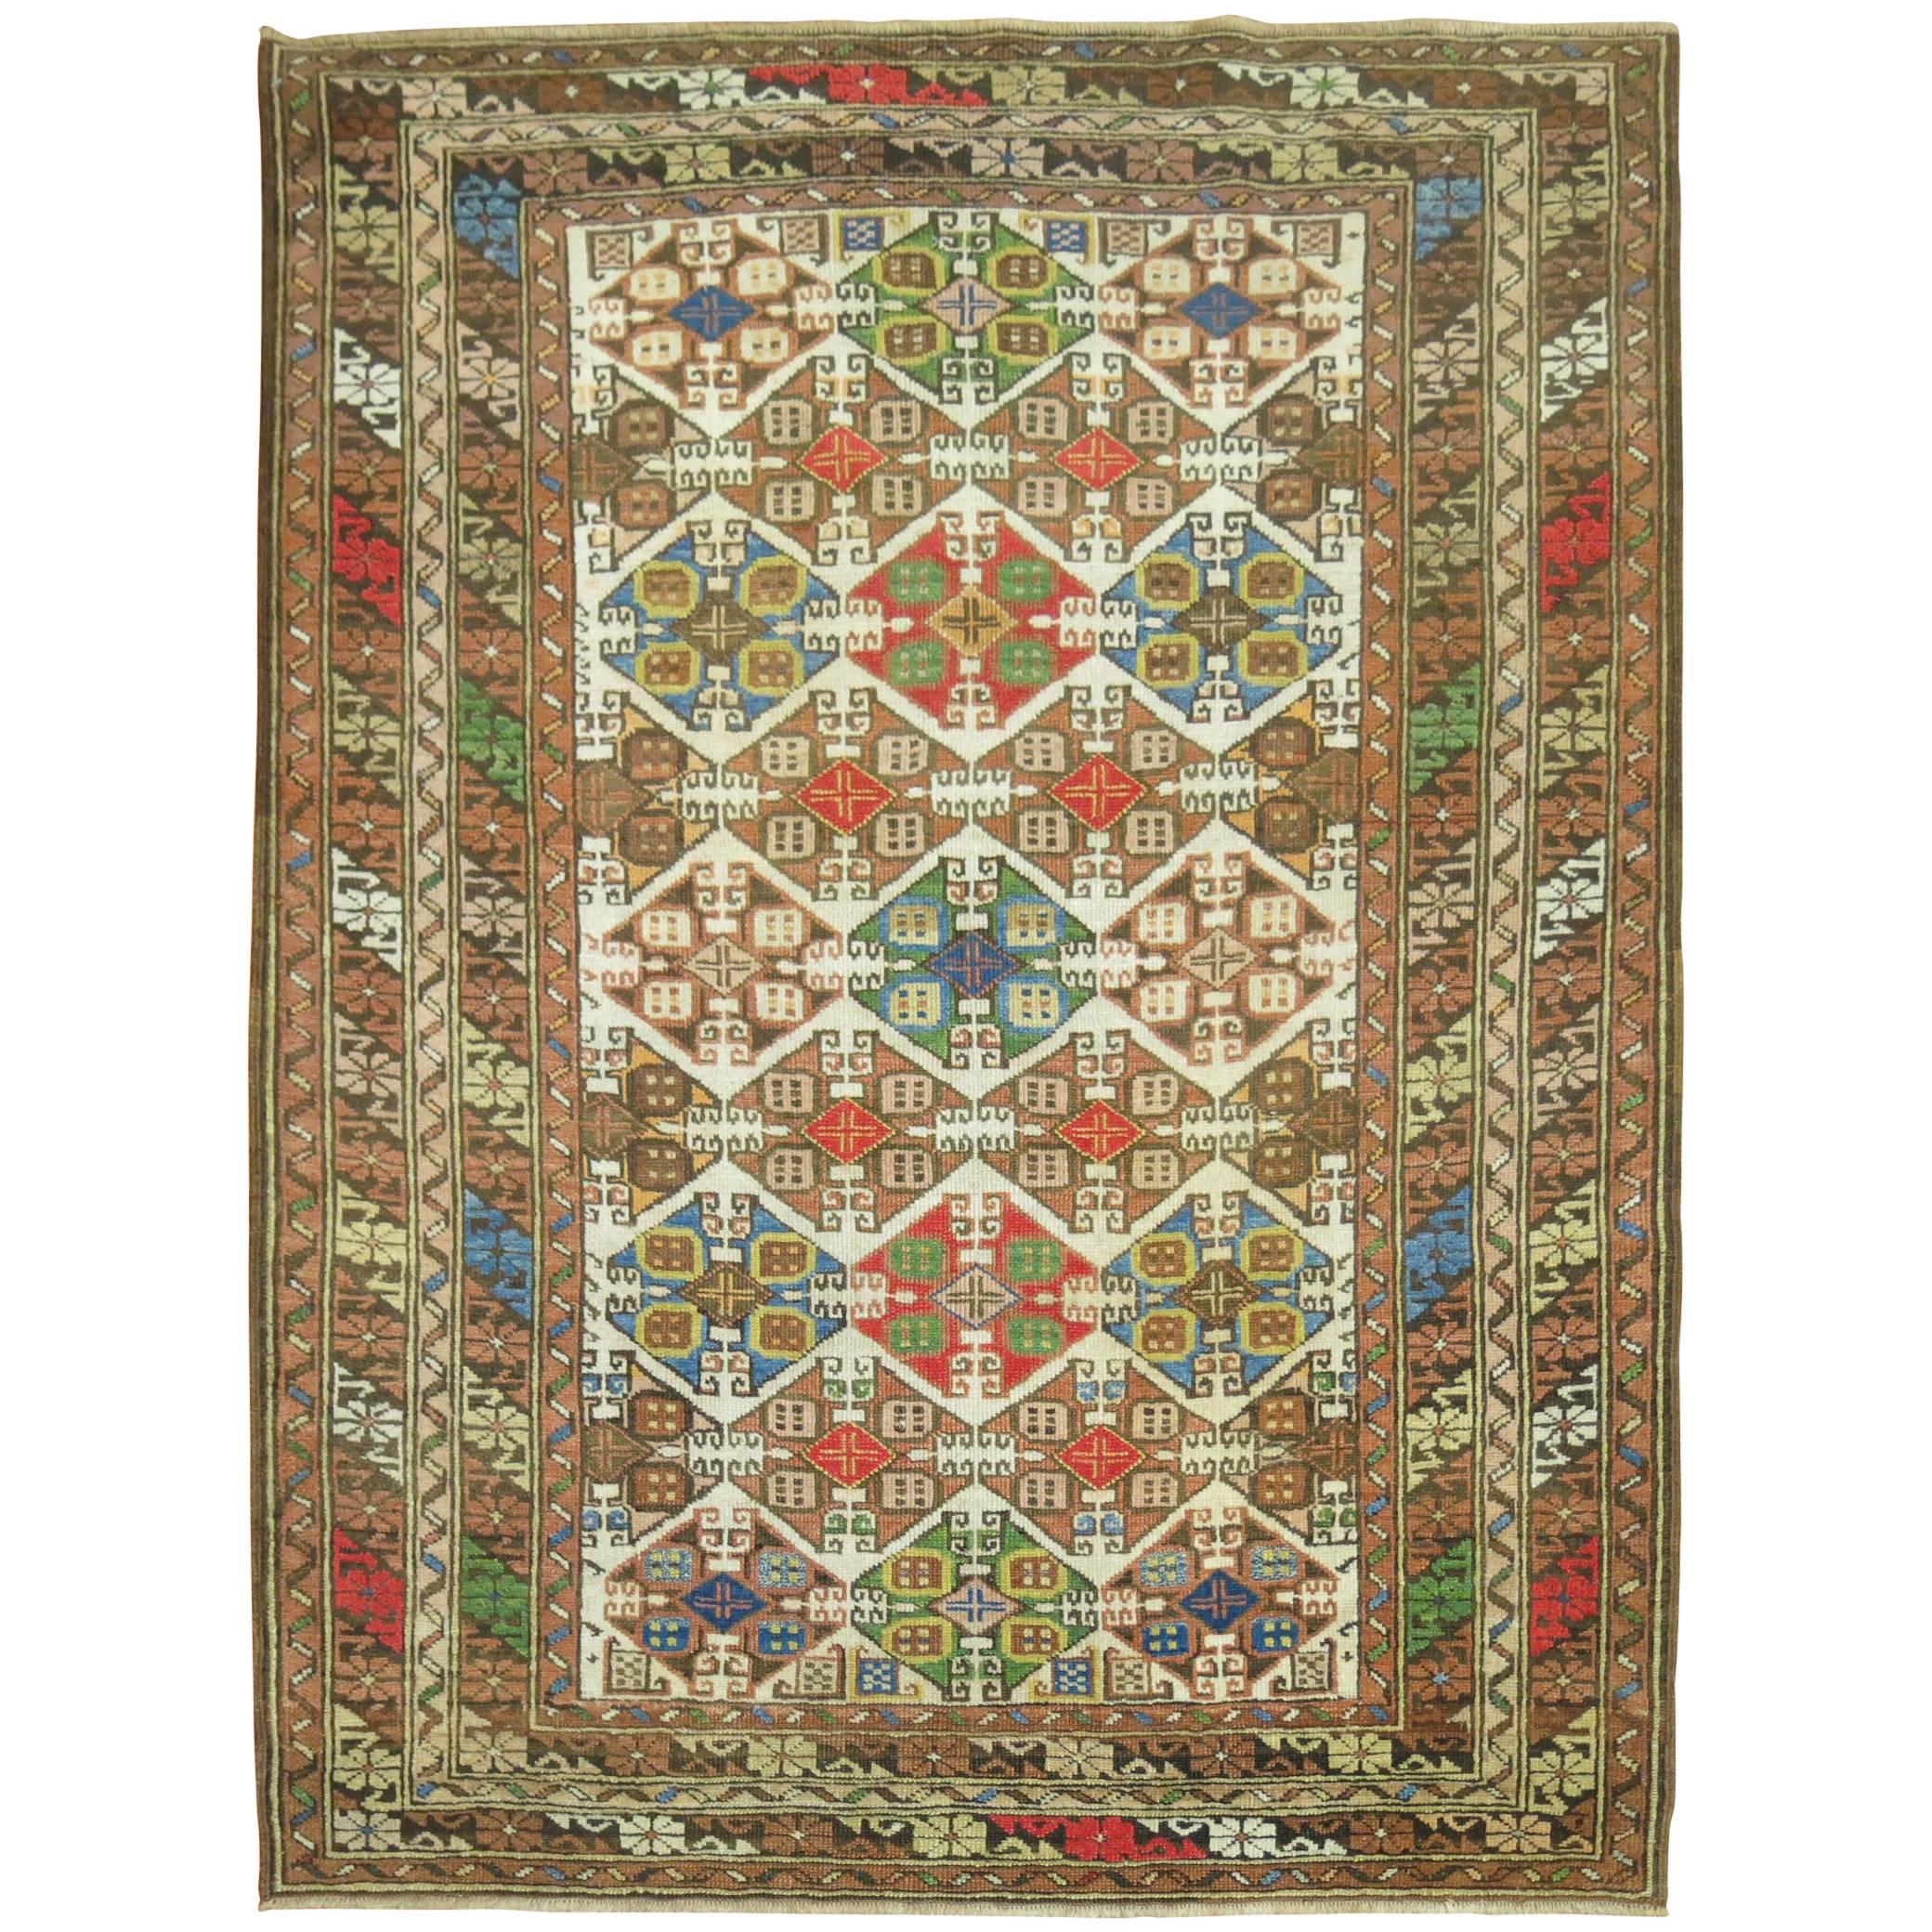 farbenfroher antiker kaukasischer Teppich aus der Zabihi-Kollektion